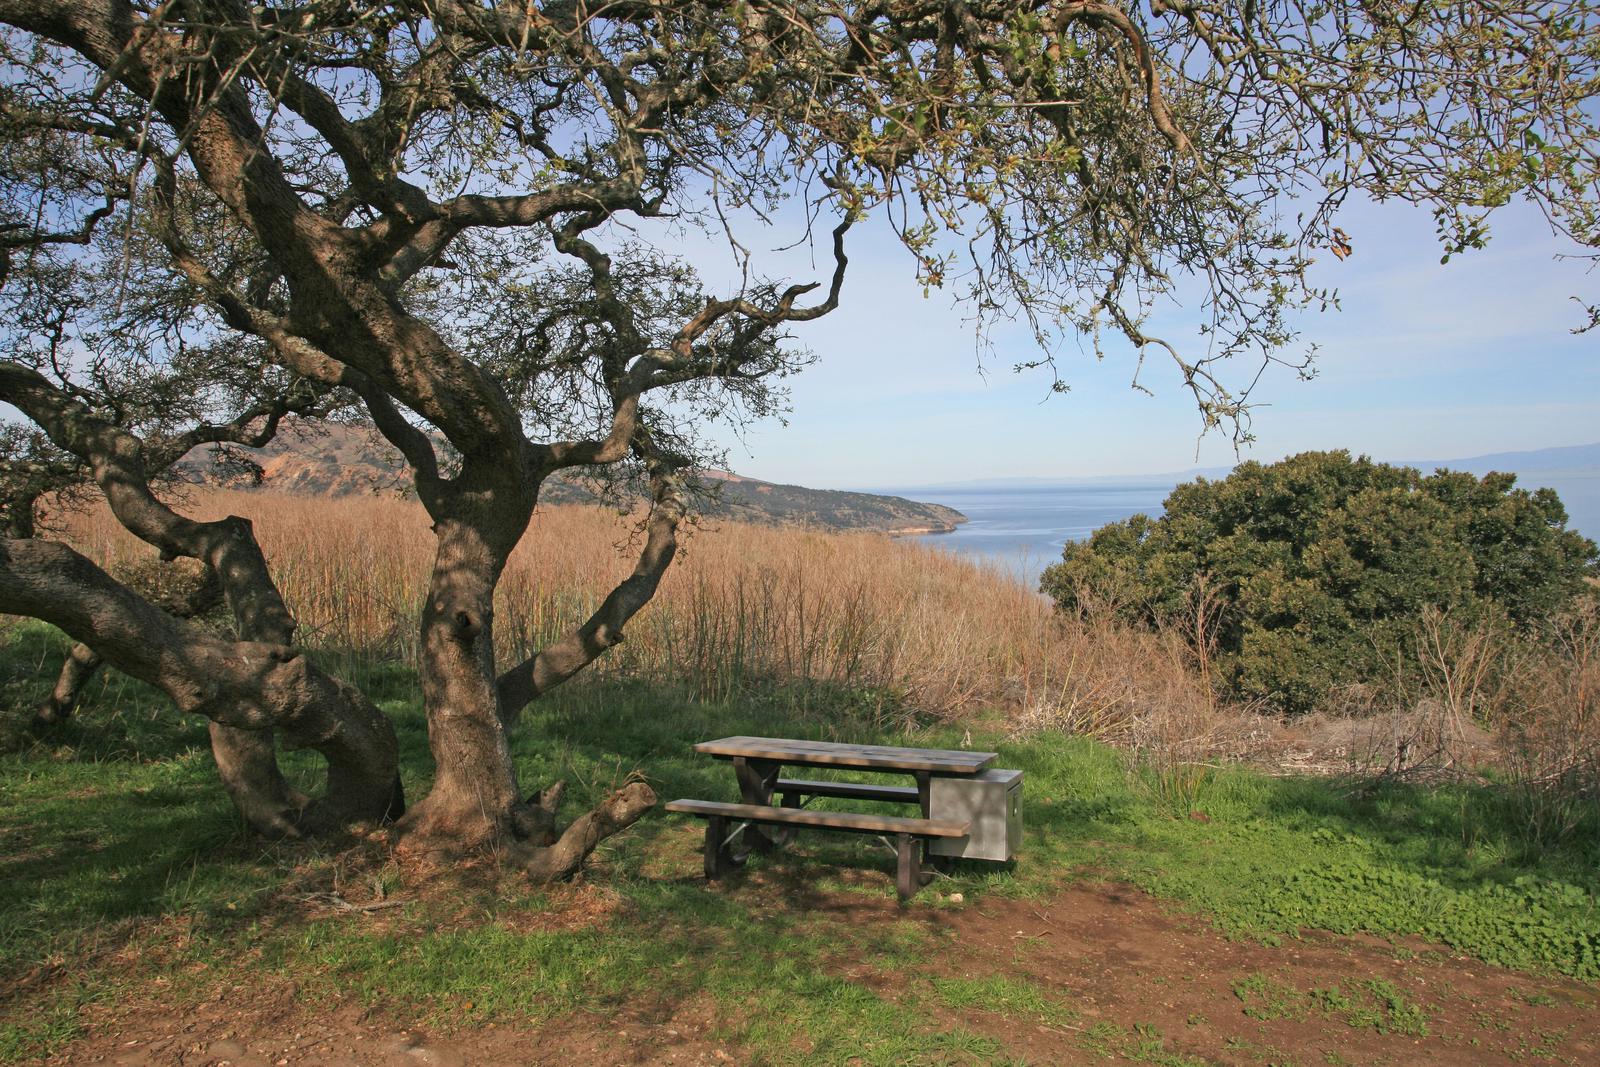 Picnic table next to large tree overlooking ocean. Del Norte Backcountry, Santa Cruz Island
